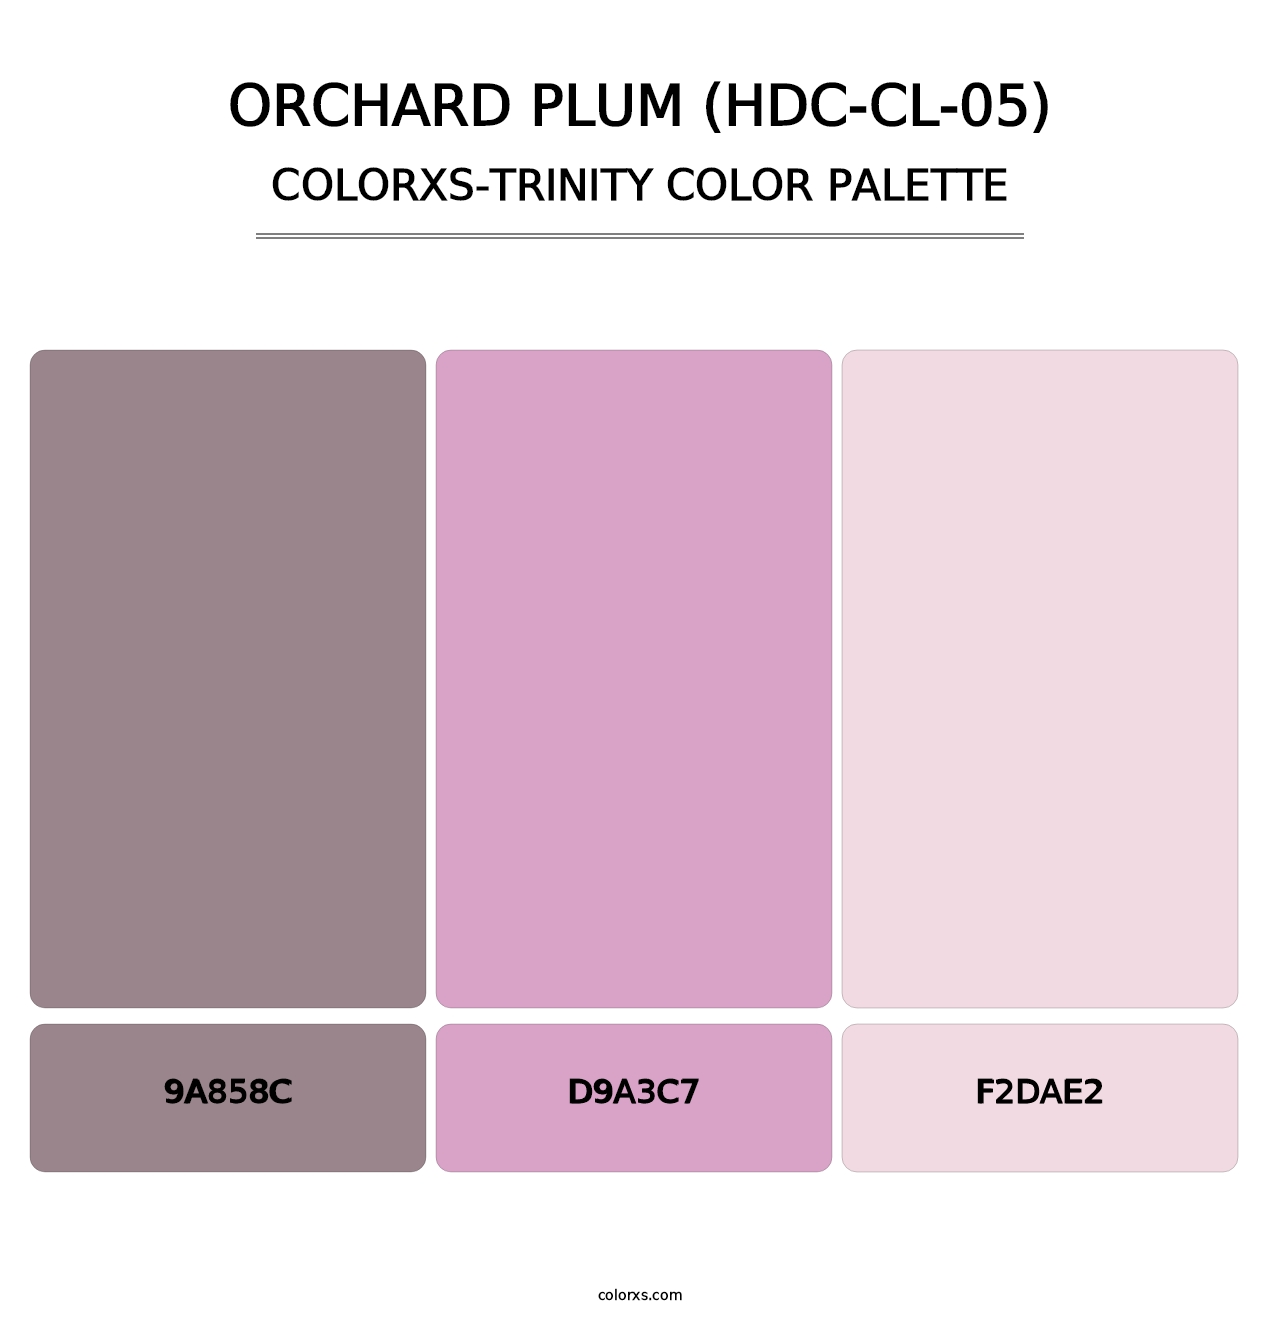 Orchard Plum (HDC-CL-05) - Colorxs Trinity Palette